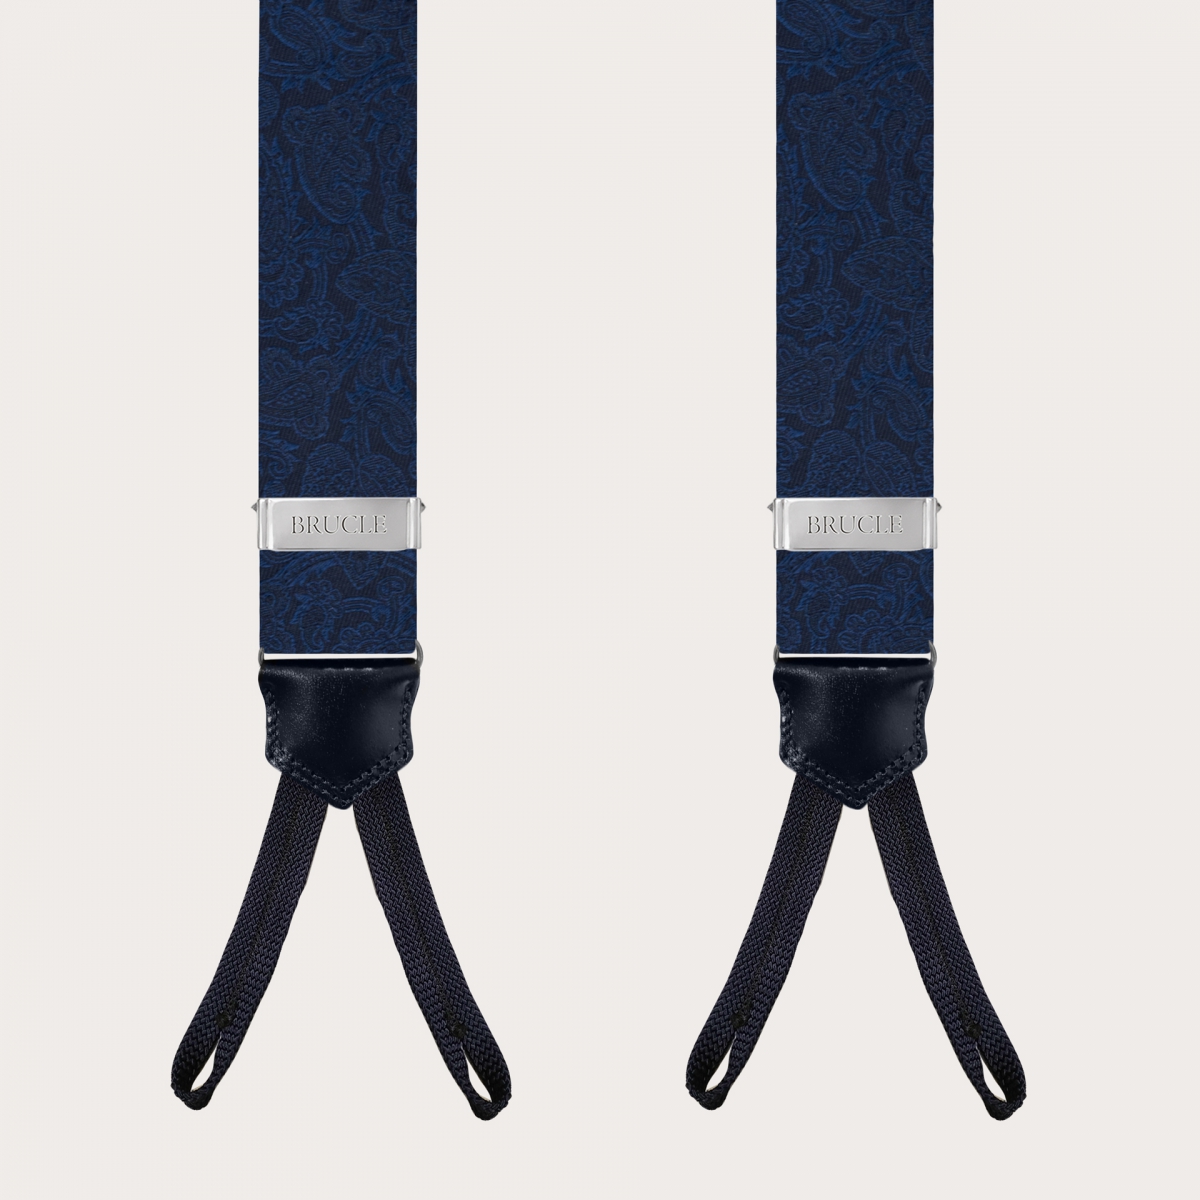 BRUCLE Hosenträger aus Seide mit Knopflöchern, Ton-in-Ton blaues Paisley-Muster